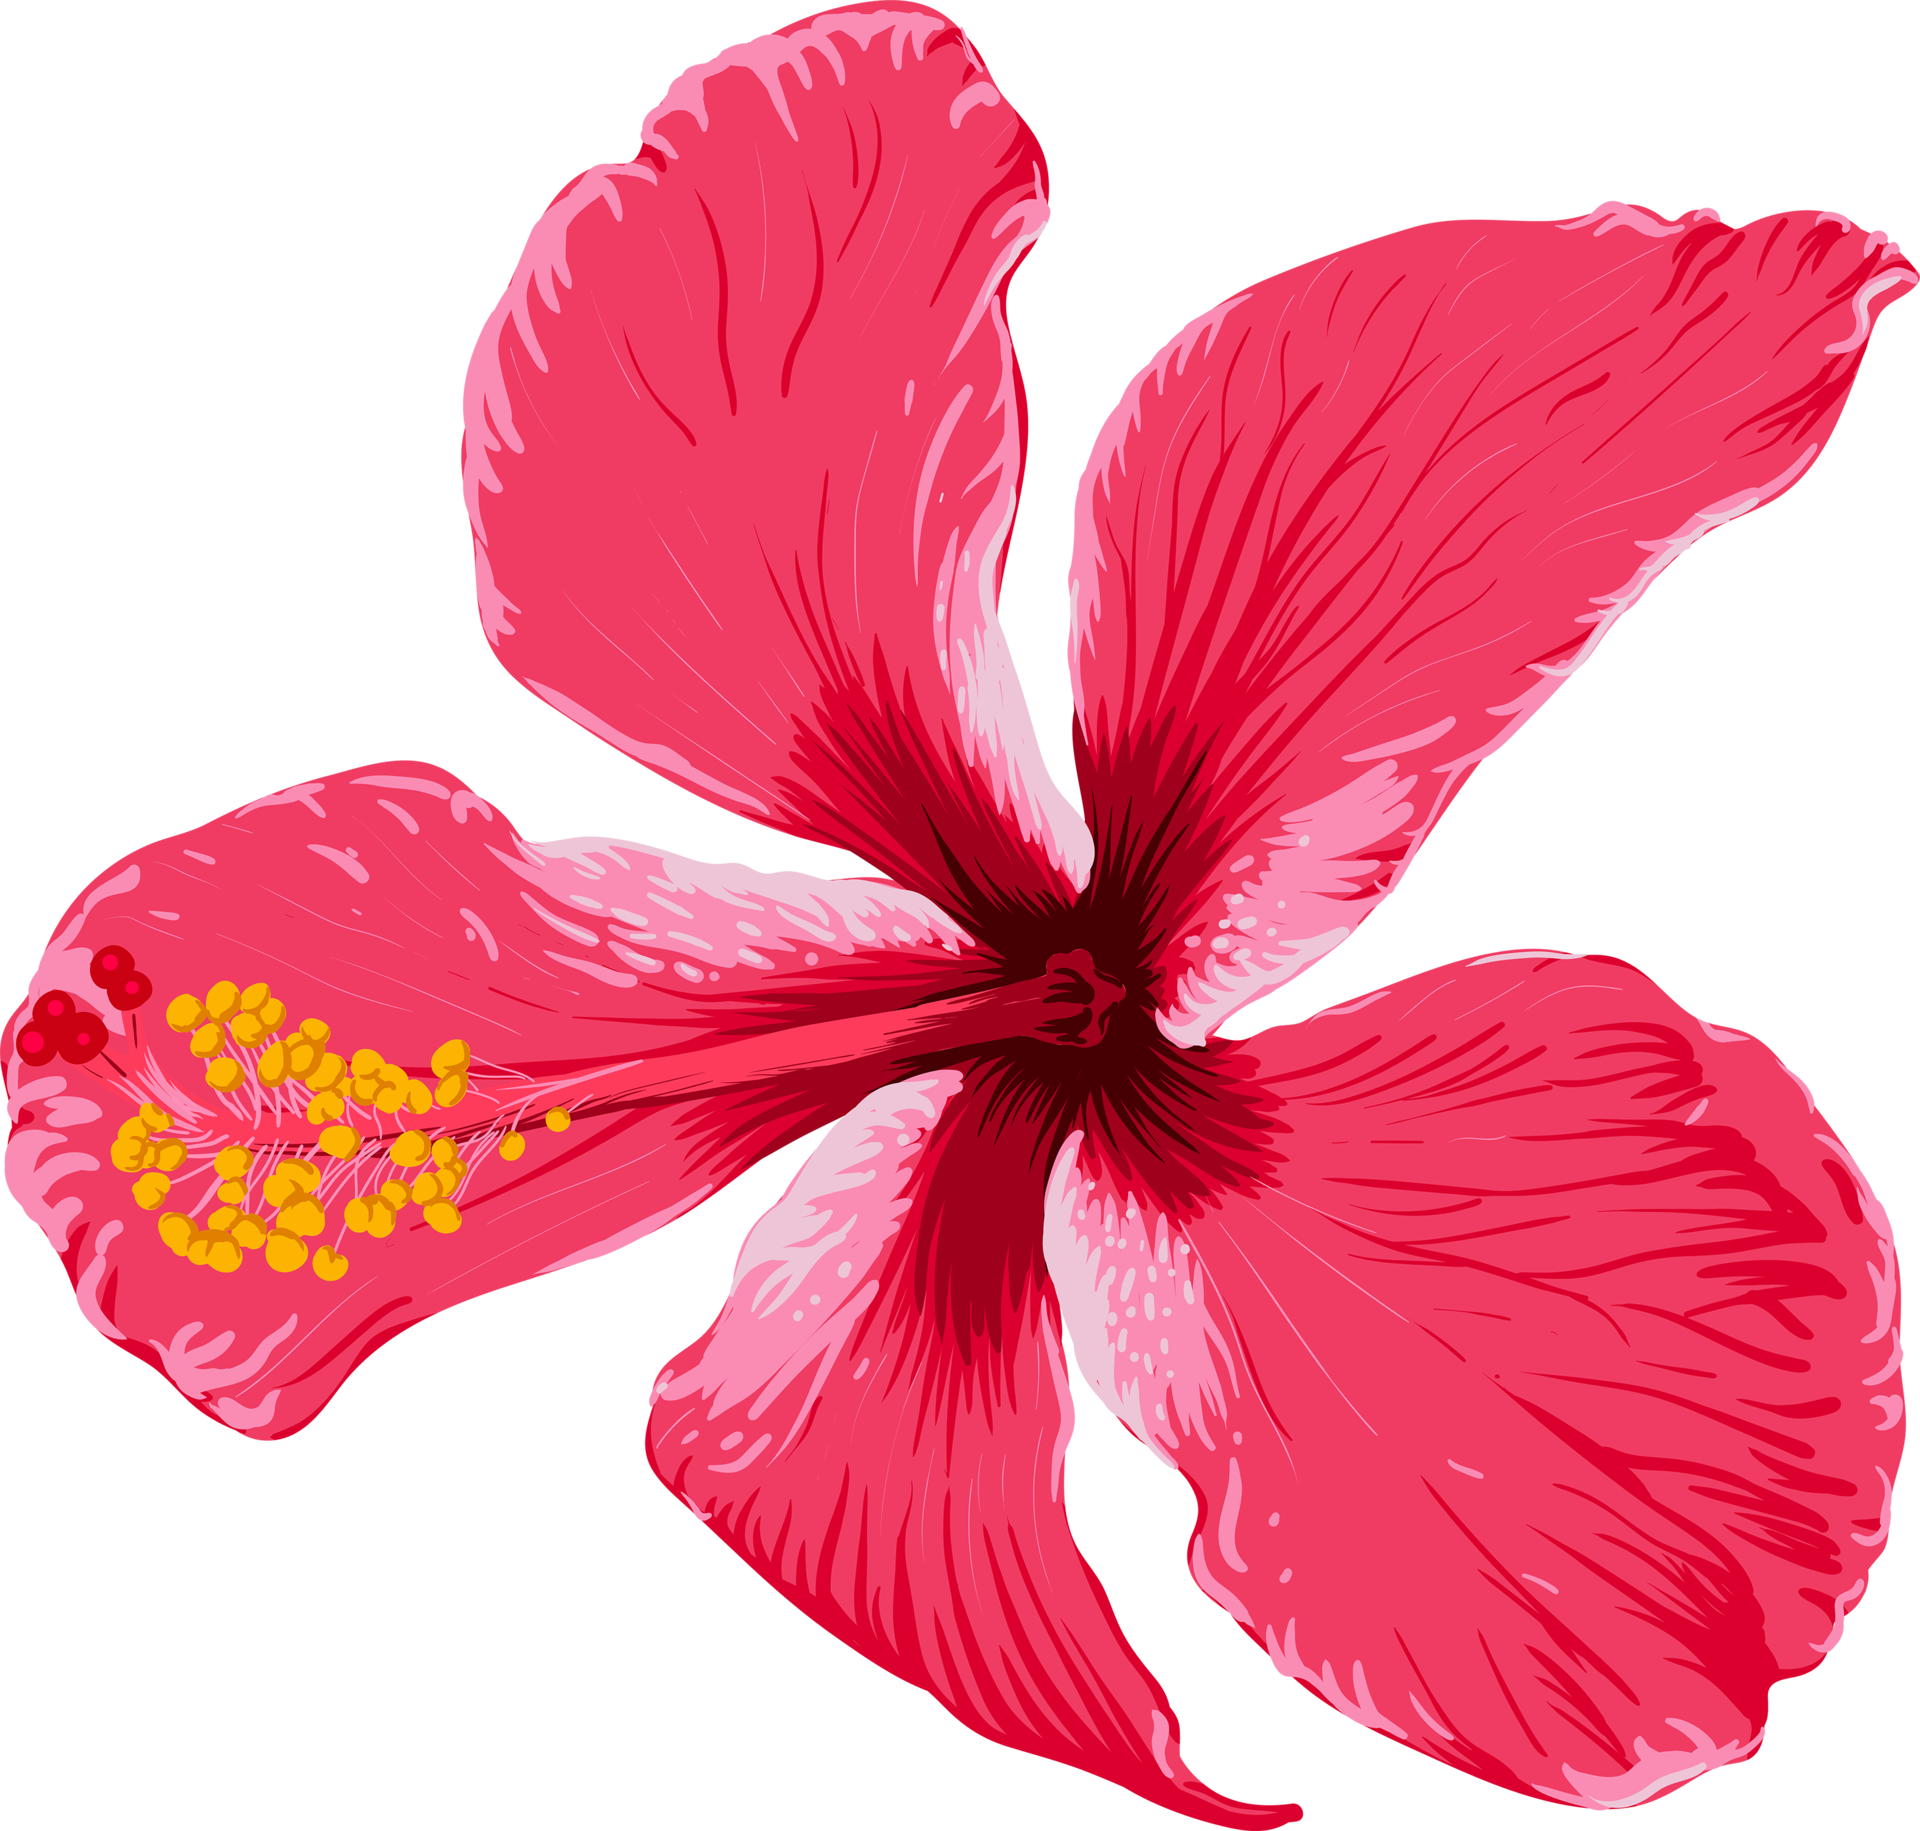 Hibiscus Flower Drawing by Kaitlin73 on DeviantArt-saigonsouth.com.vn